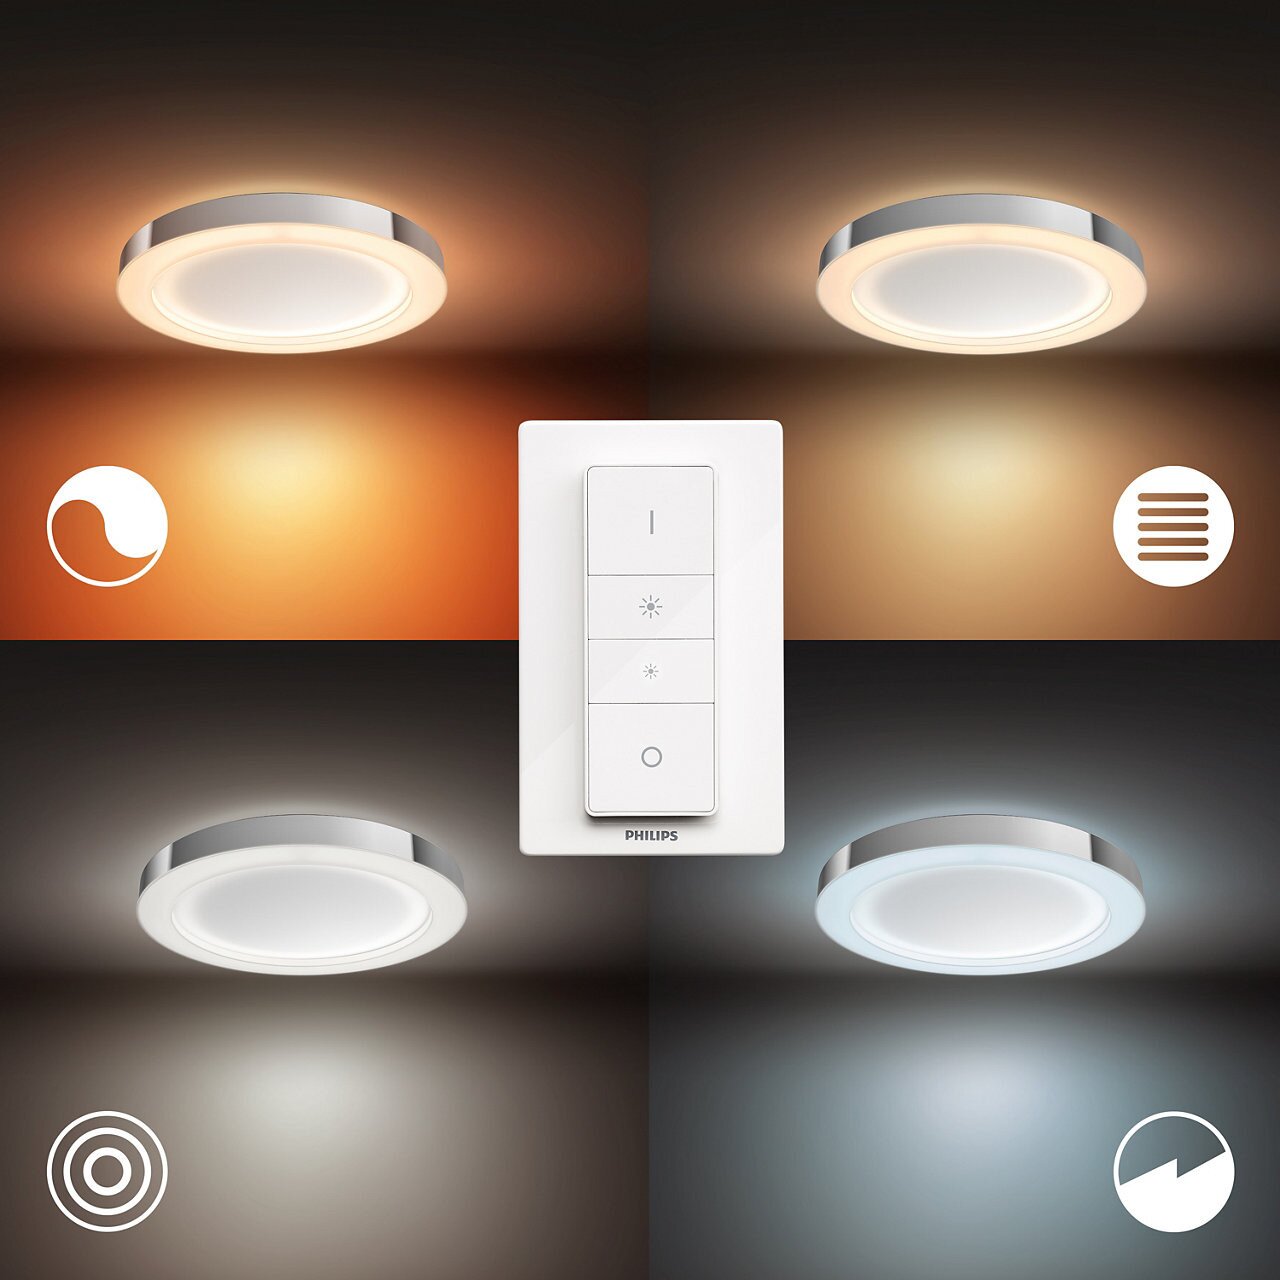 Buy Philips Adore Bathroom Ceiling Light online in ...